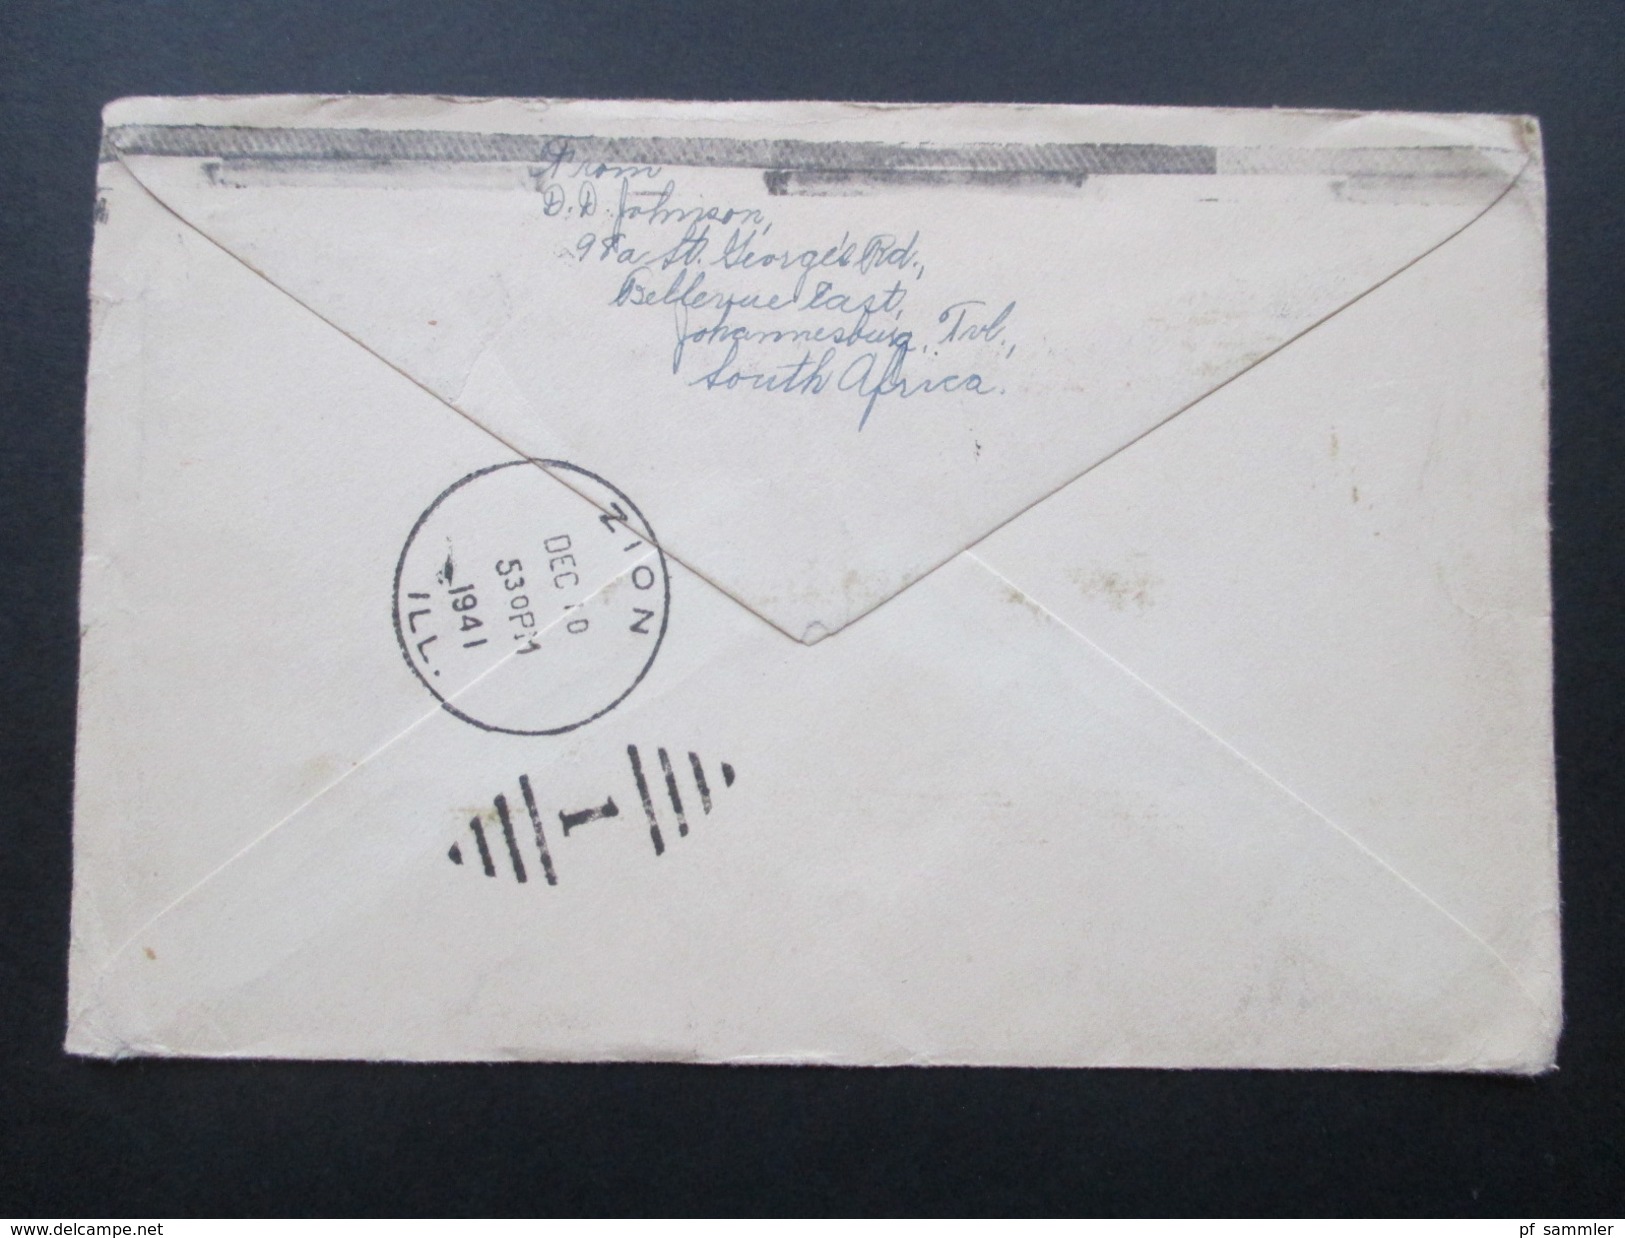 Suid-Afrika 1941 Brief Von Johannesburg - Zion Ill. USA Forwarded To 1004 Nevada - Storia Postale